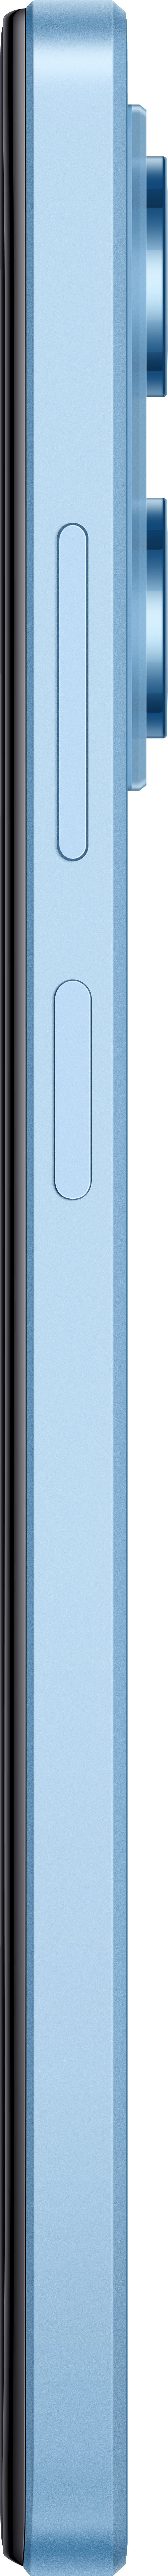 XIAOMI Redmi 5G Blue Note Sky Dual Pro SIM GB 128 12